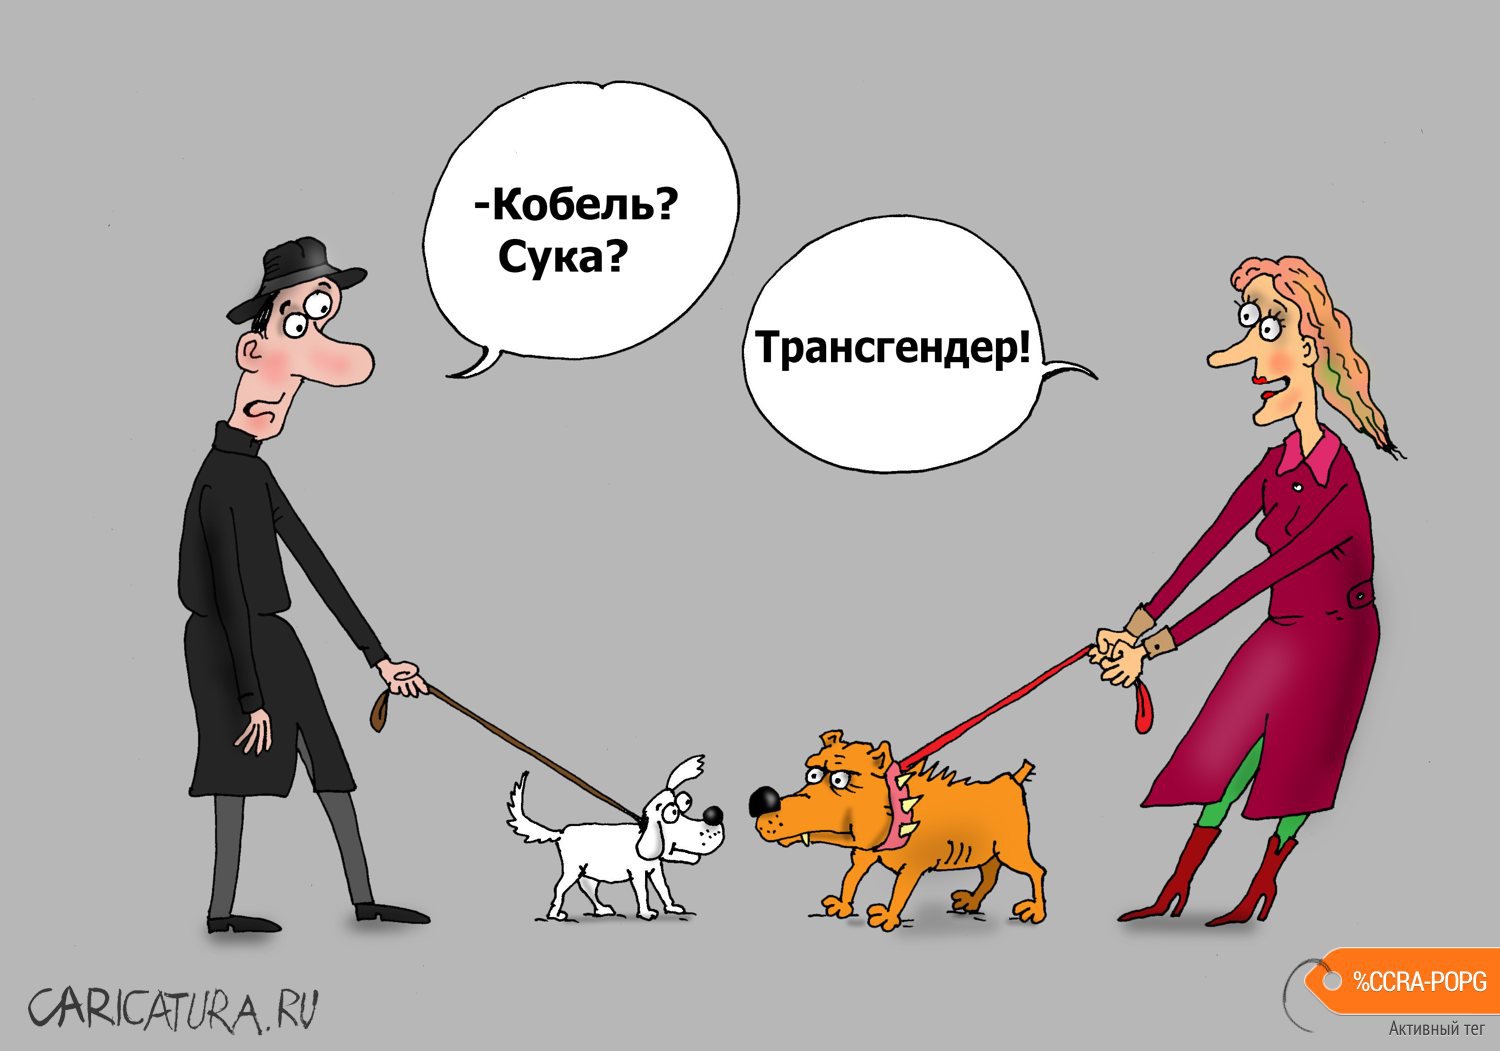 Карикатура "Собачники", Валерий Тарасенко